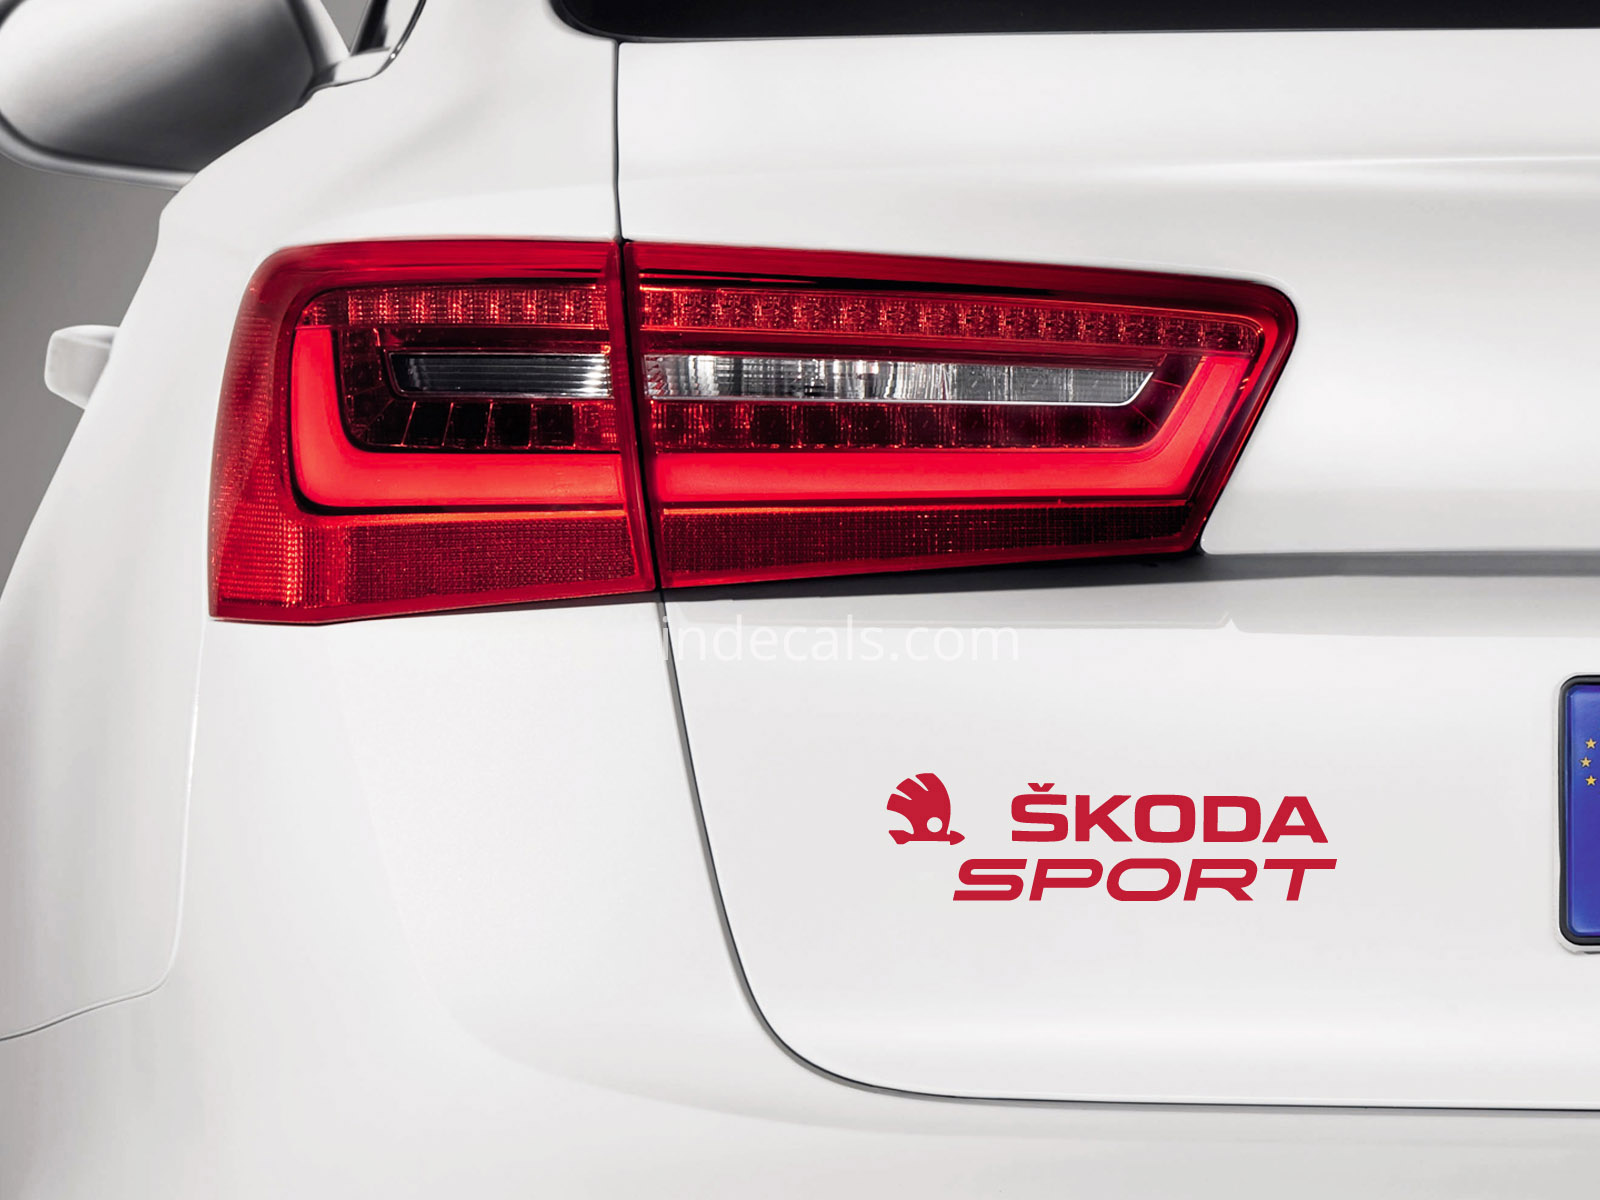 1 x Skoda Sports Sticker for Trunk - Red